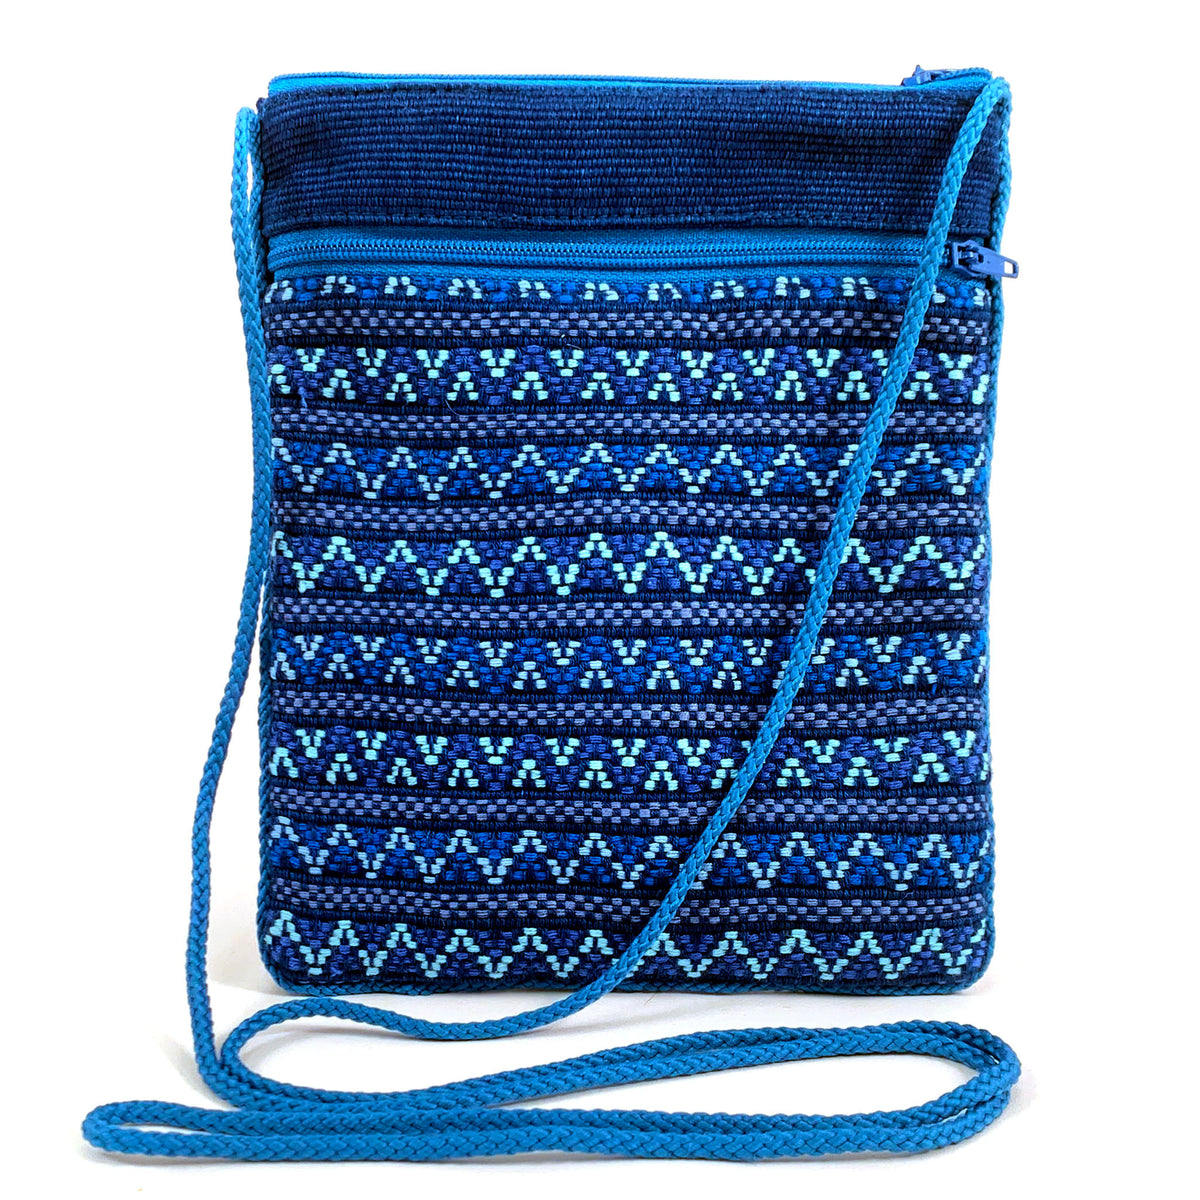 handwoven brocade pocket bag in blues